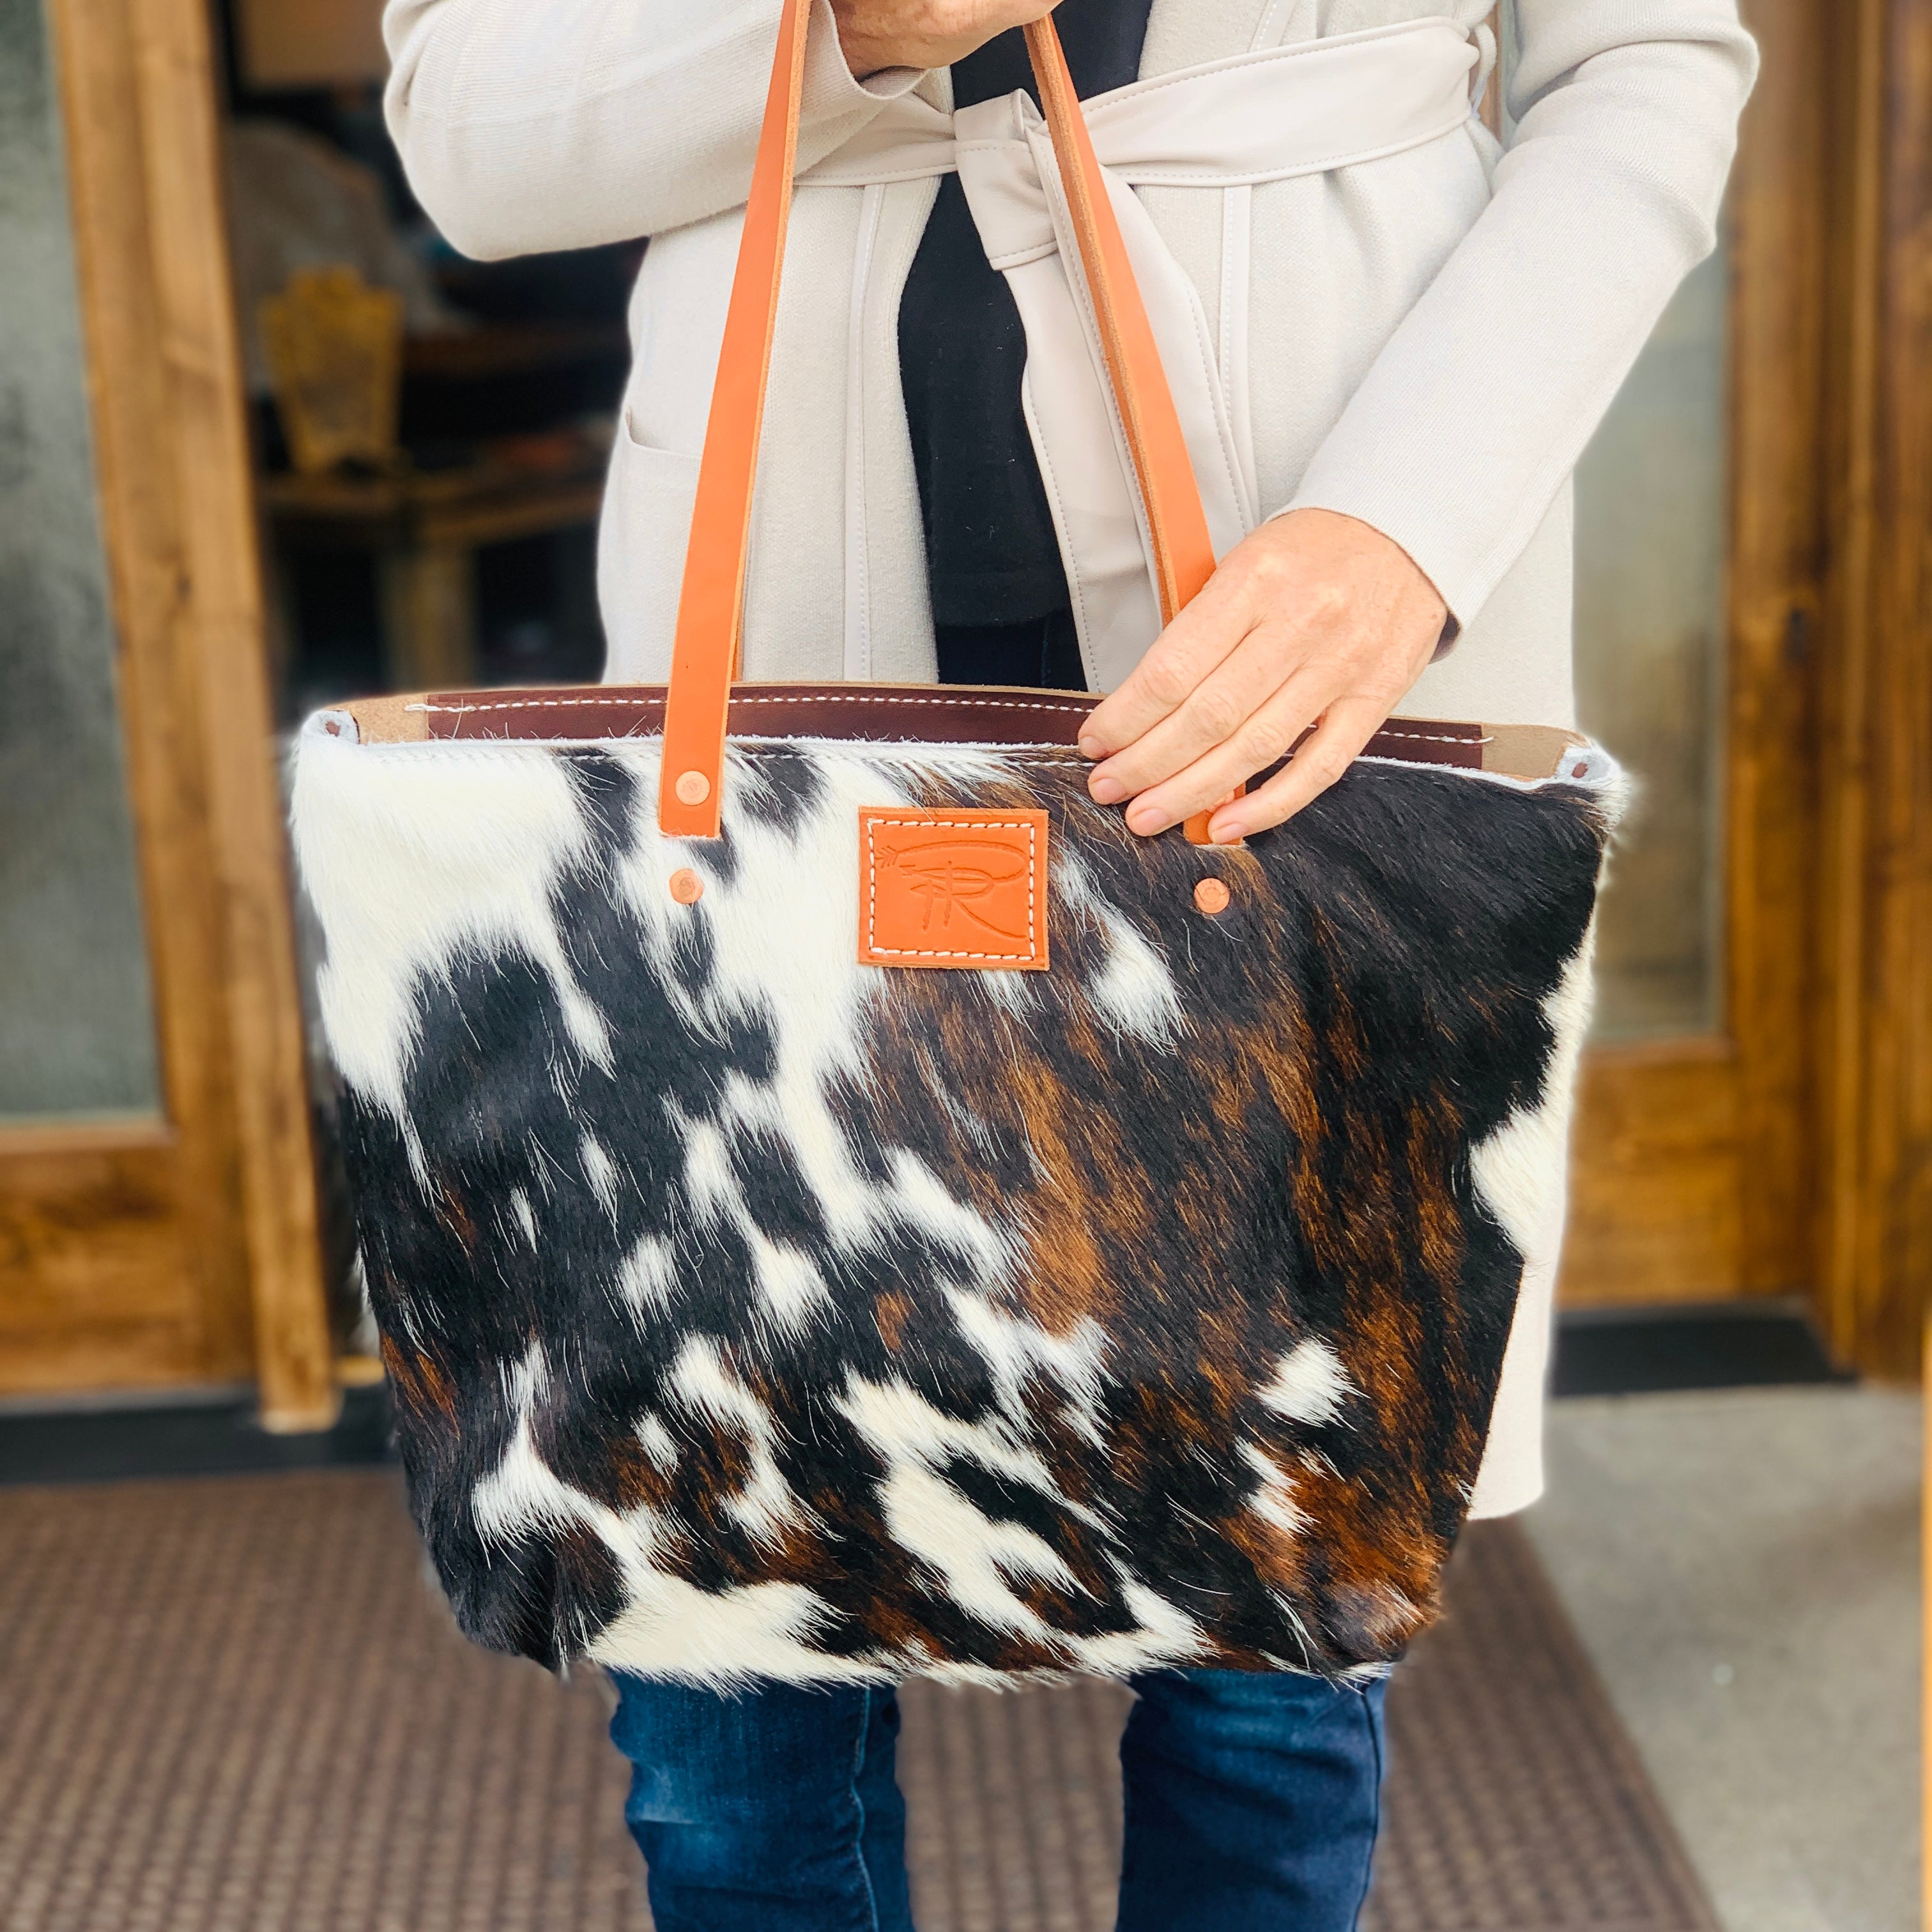 tote bag purse handbags retail shop gifts idaho boutique